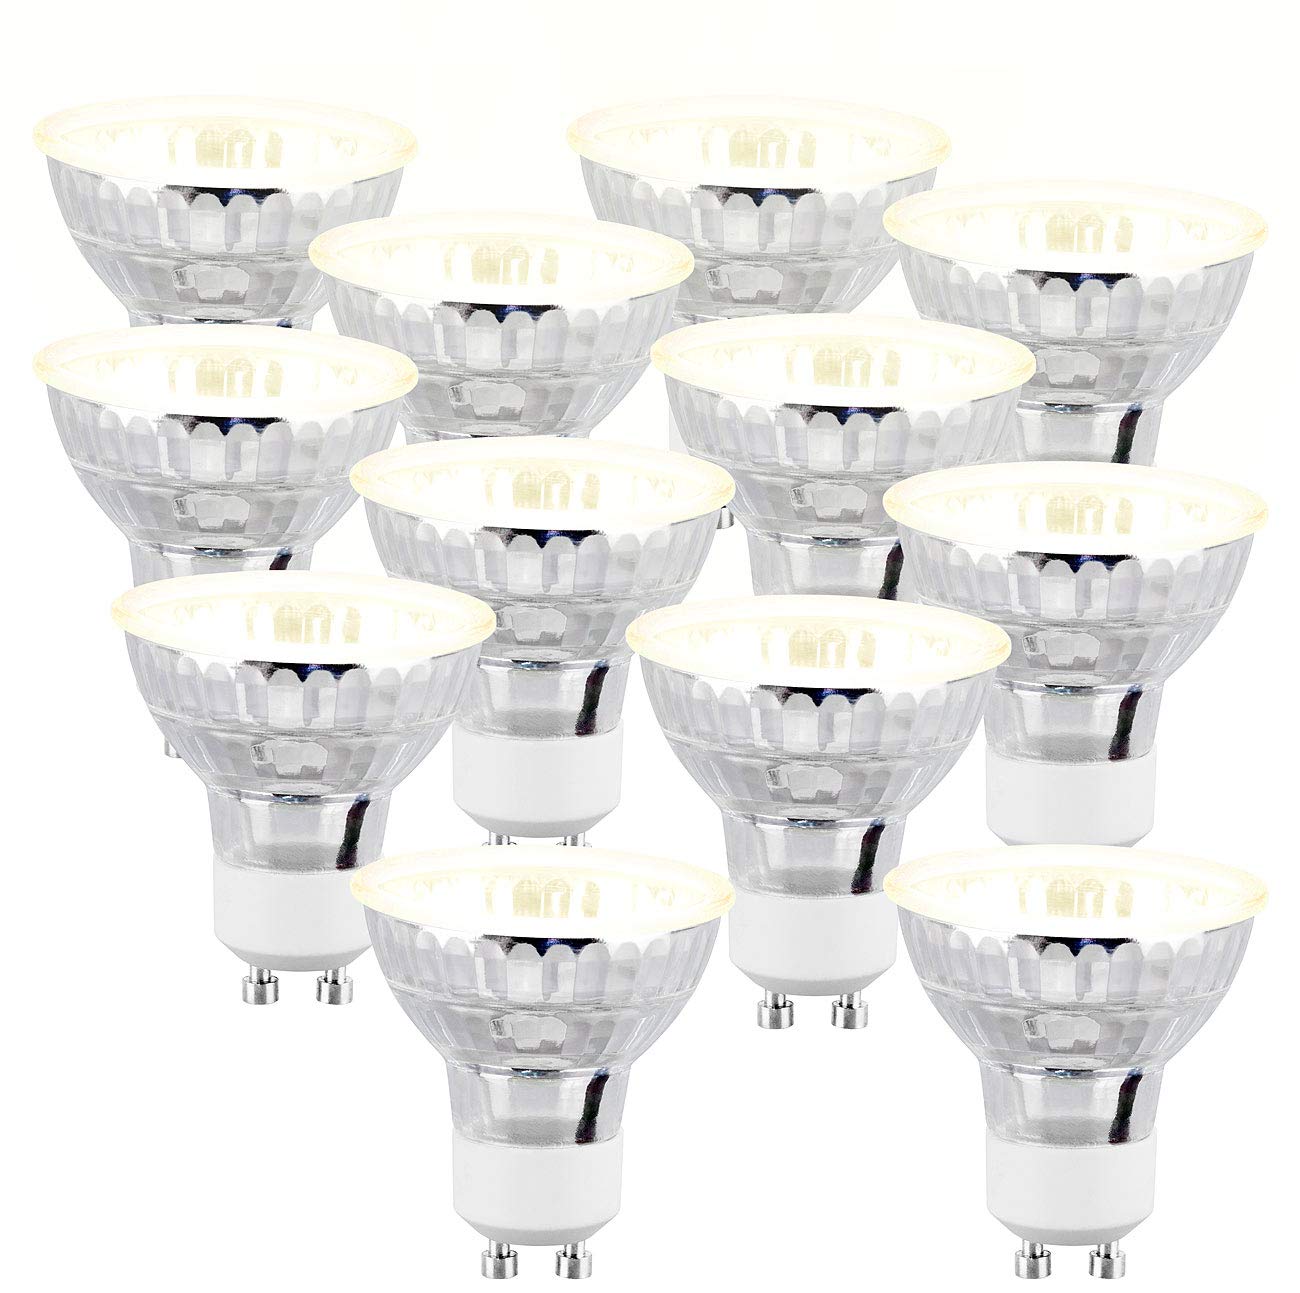 Luminea GU10: 12er-Set LED-Spotlights im Glasgehäuse, warmweiß, 300 Lumen (LED Spots GU10 warmweiß, Spotlight GU10, Deckenleuchte)